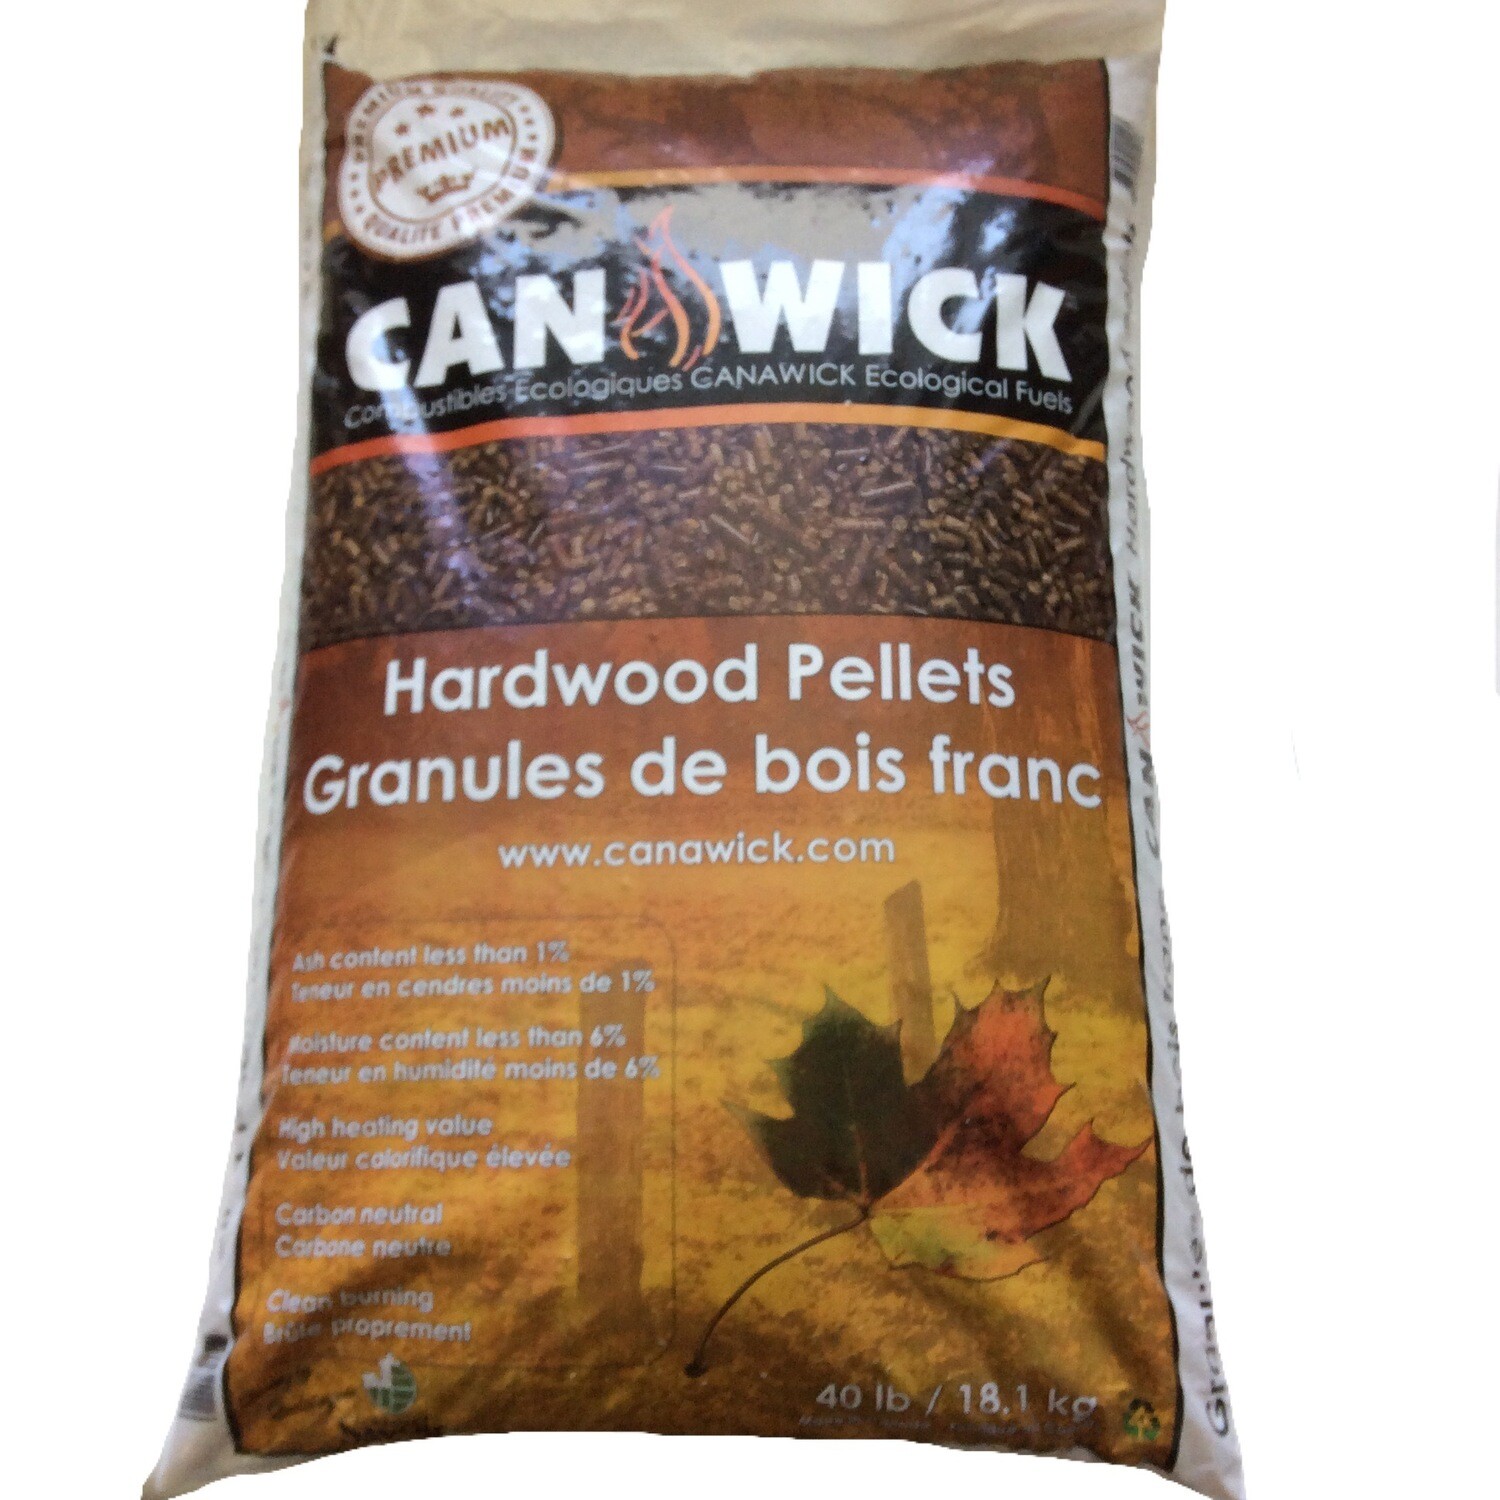 Canwick Hardwood Pellets